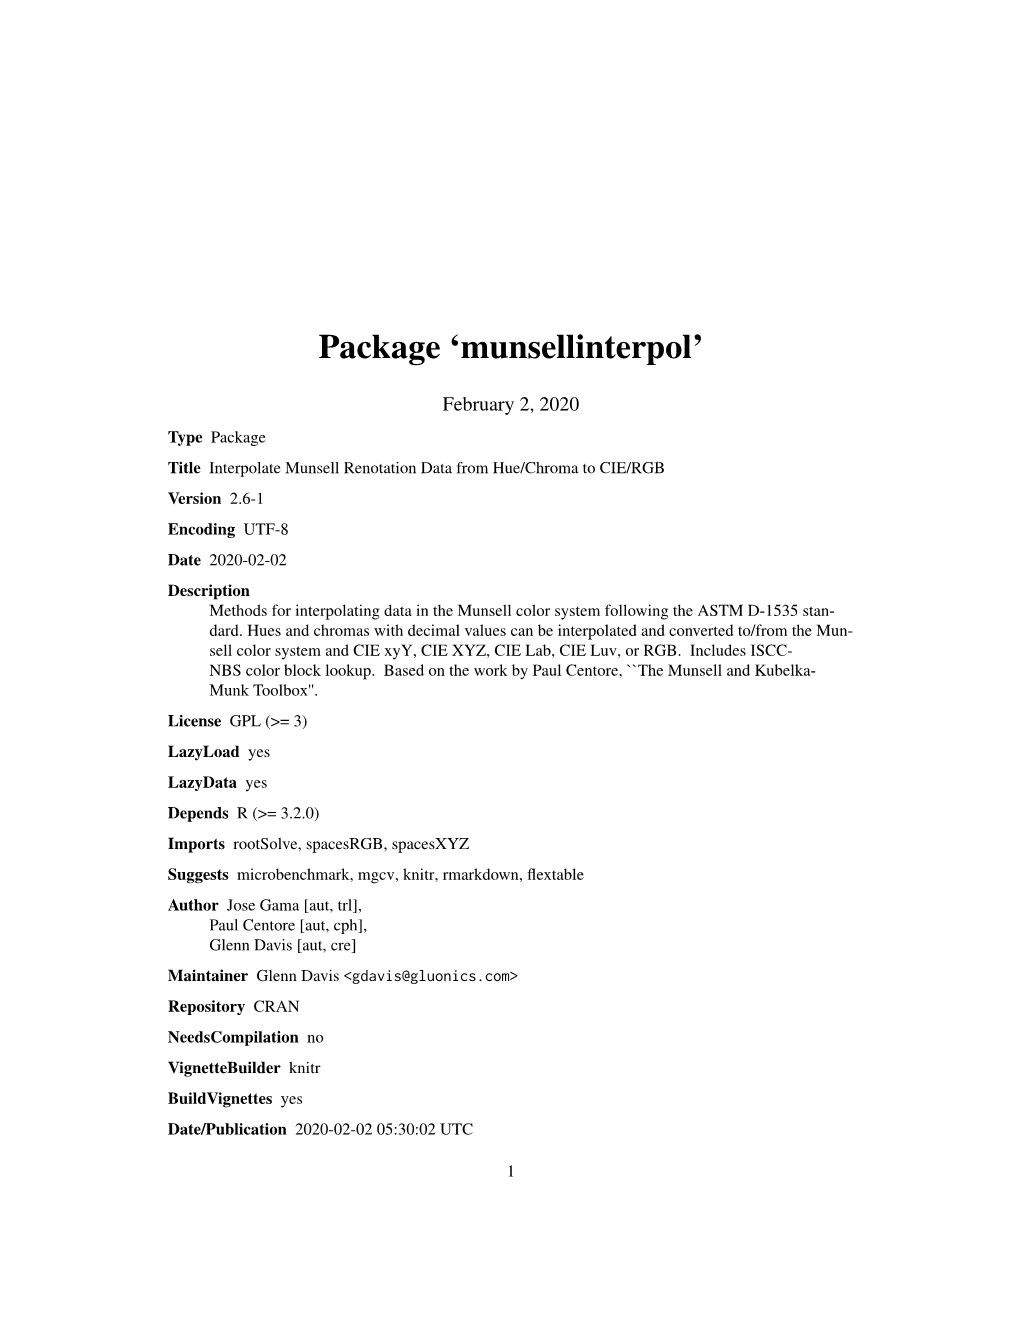 Package 'Munsellinterpol'